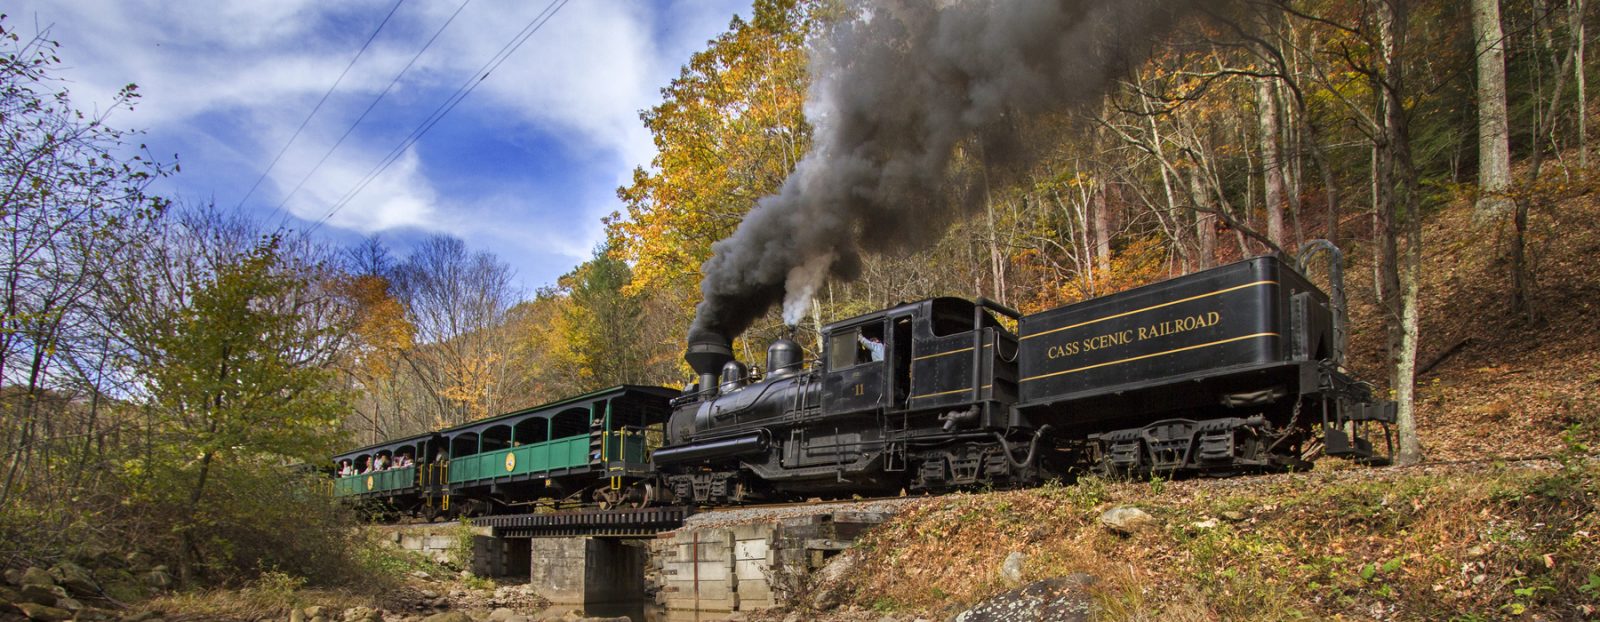 West Virginia train trip